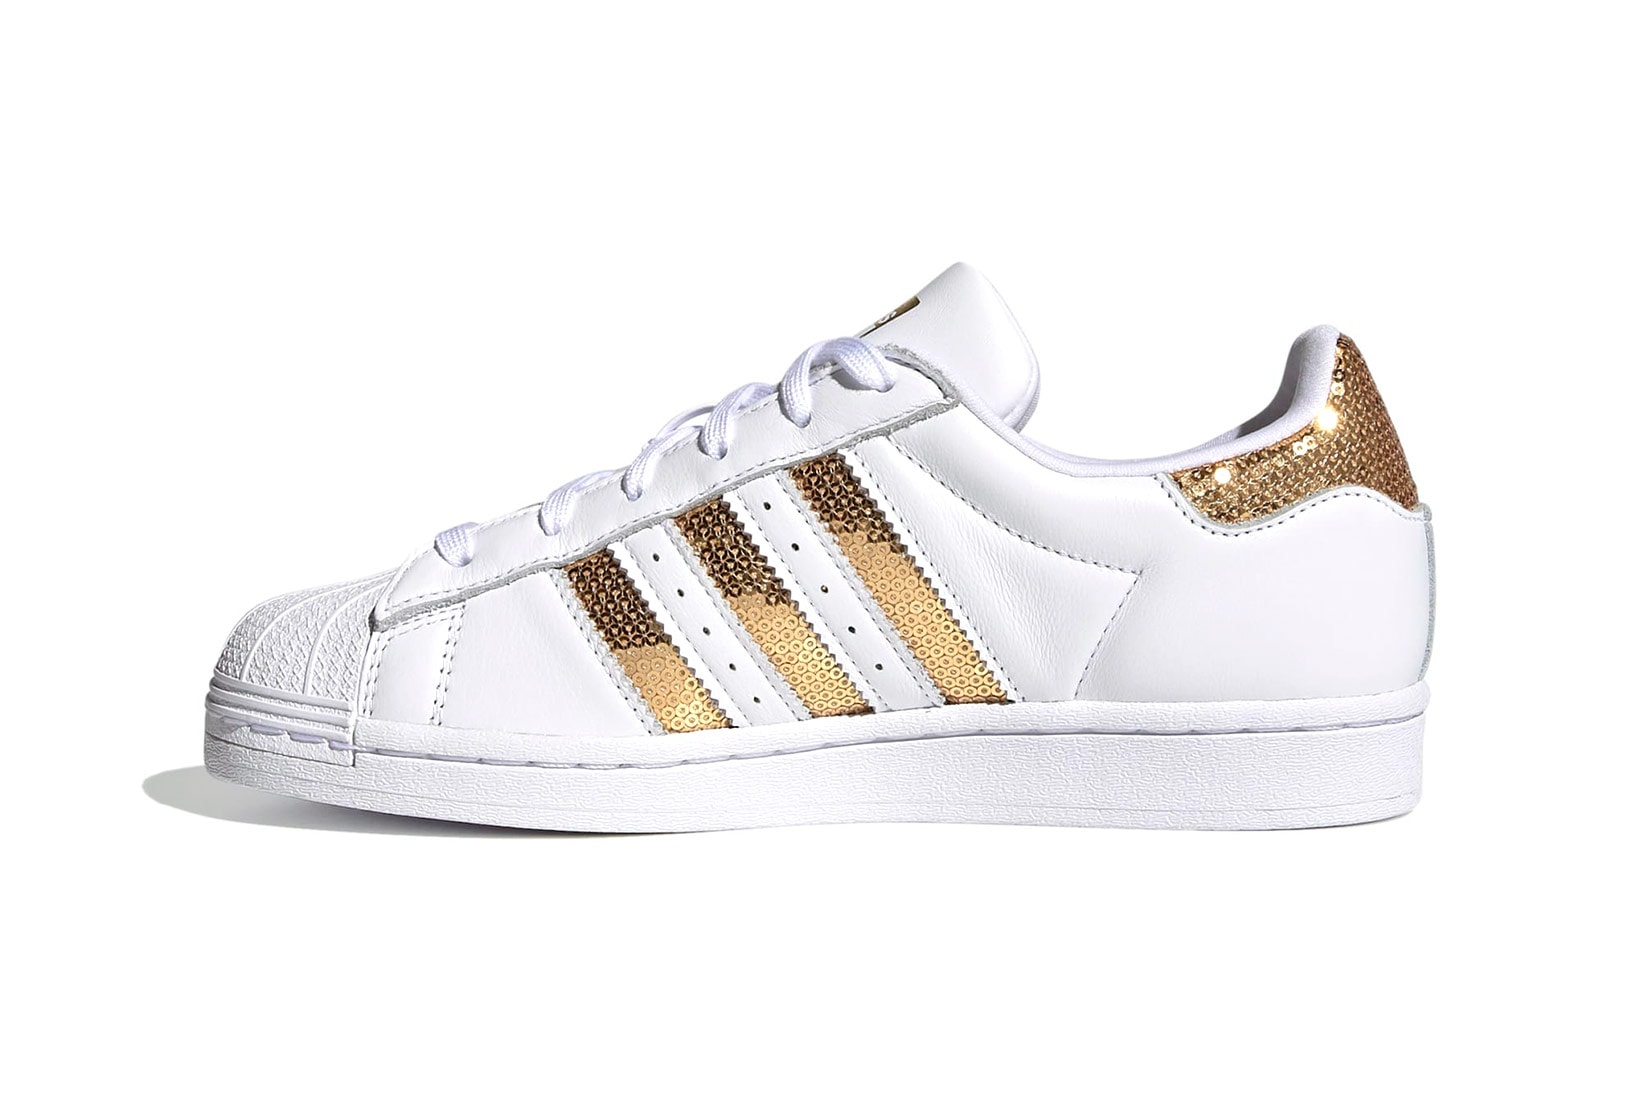 adidas originals superstar womens sneakers metallic gold sequins white colorway sneakerhead footwear shoes lateral